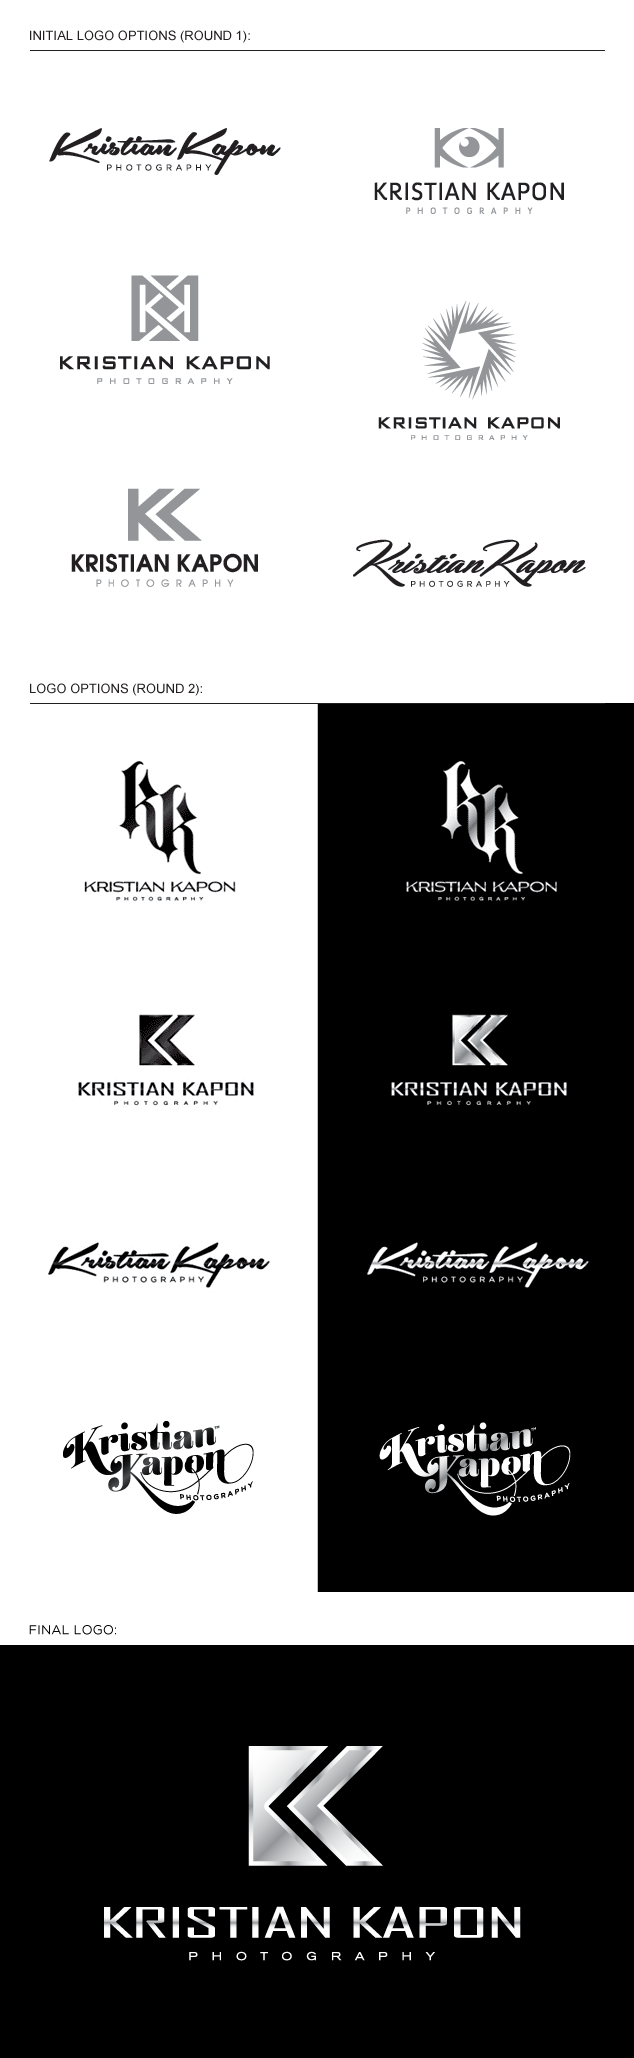 photography logo design for KK, Dallas Fort Worth, Texas photographer